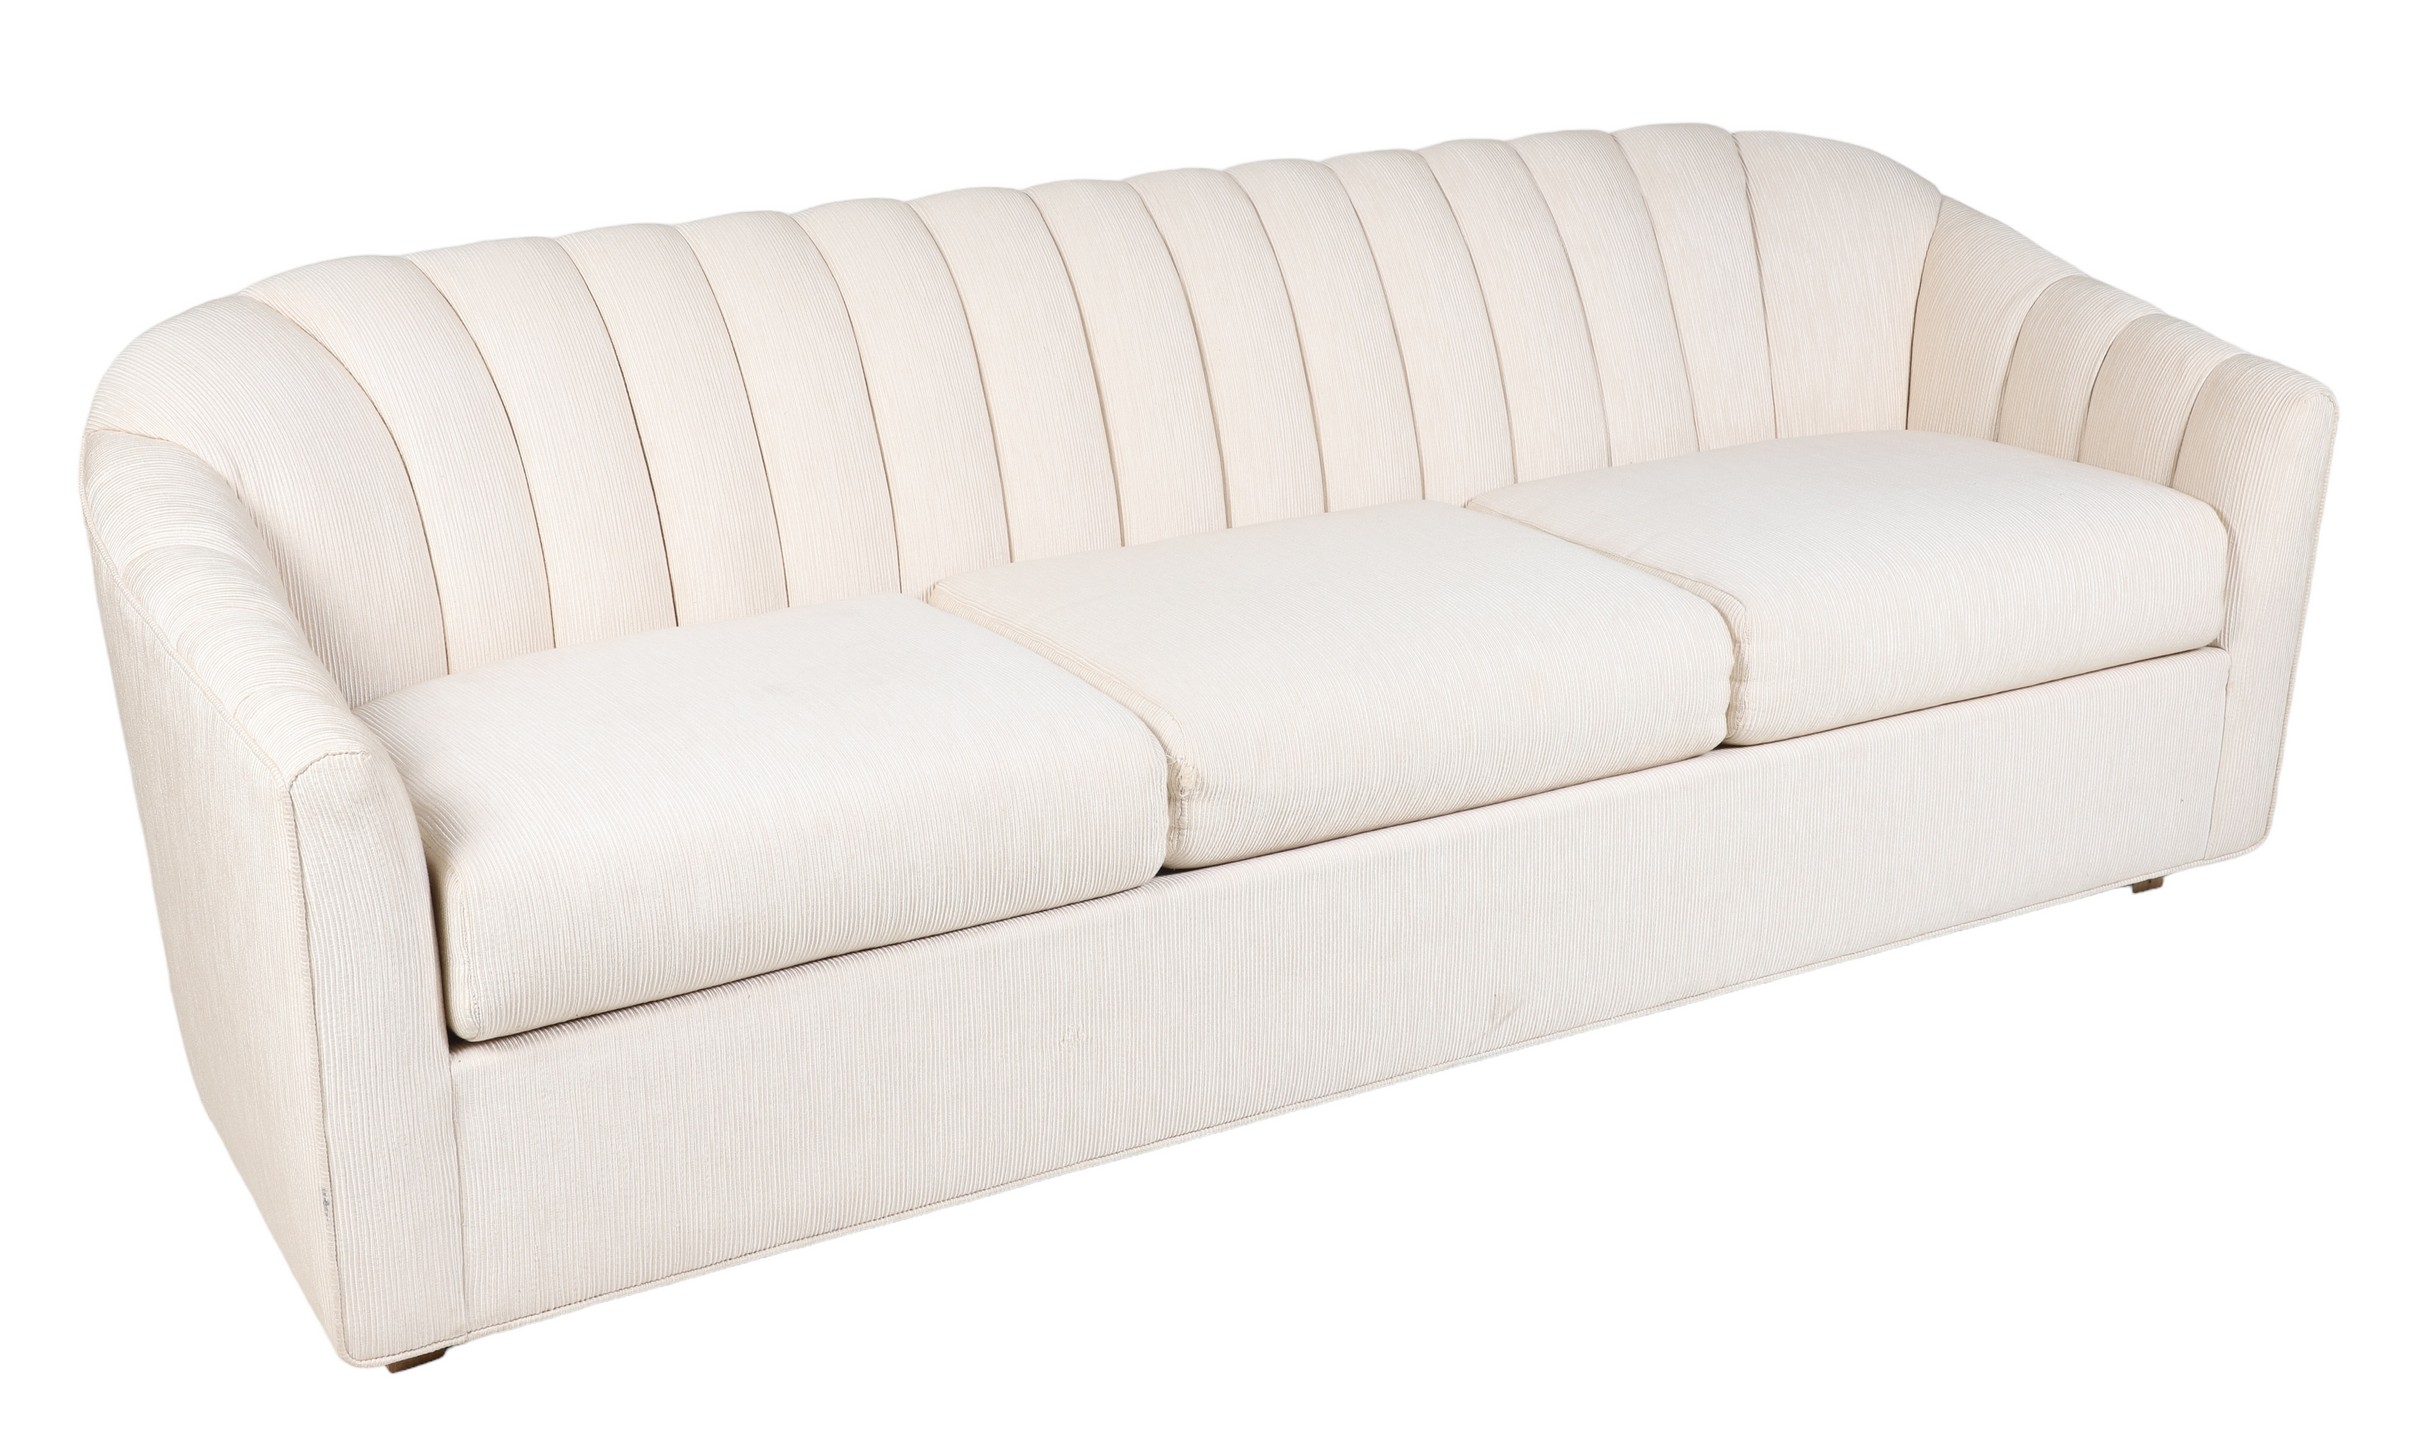 Dunbar style Modern Design sofa,